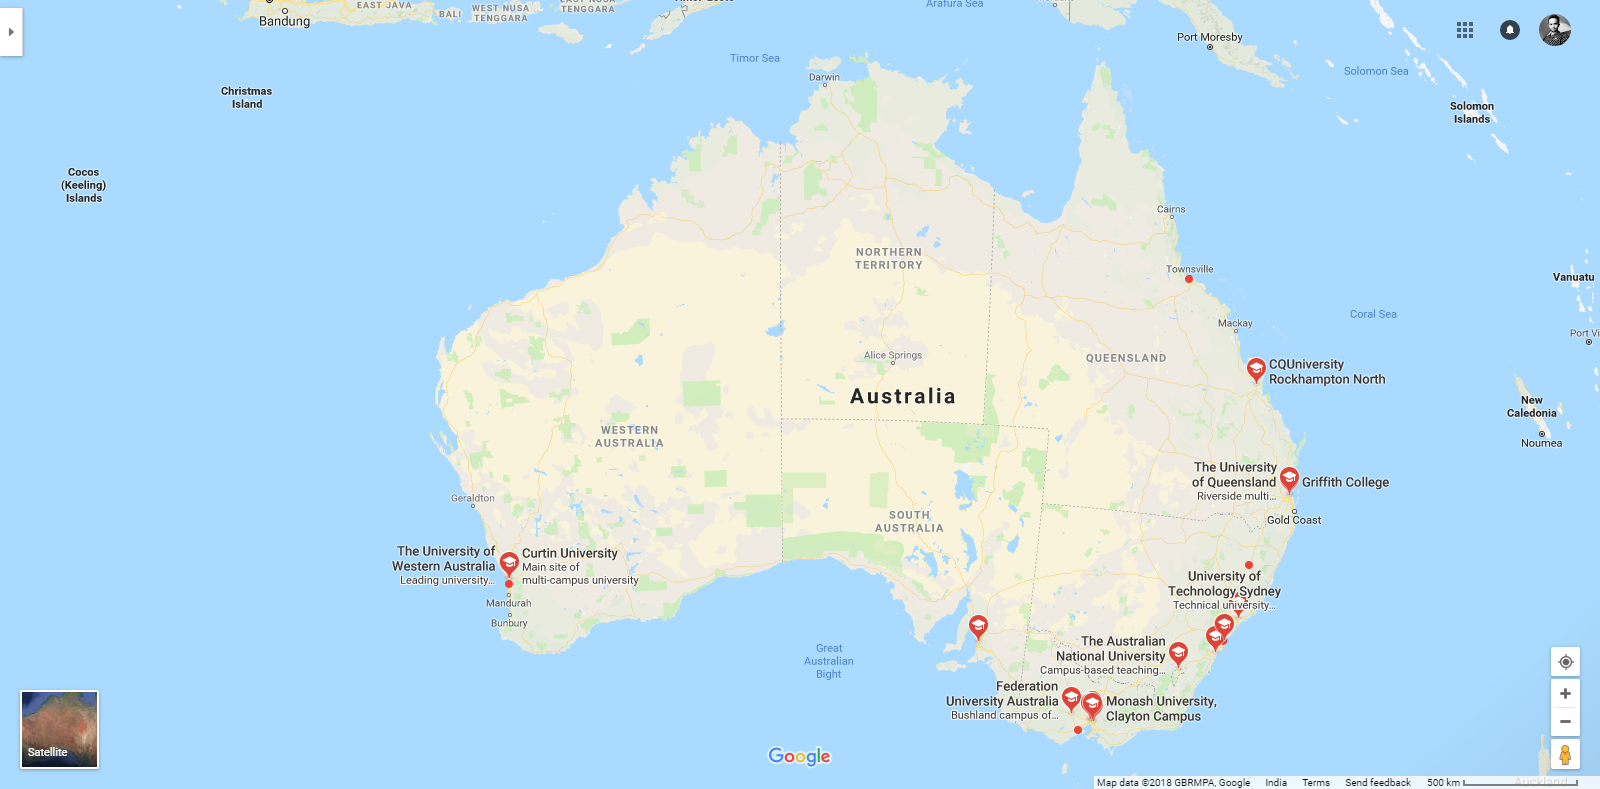 universities-in-australia